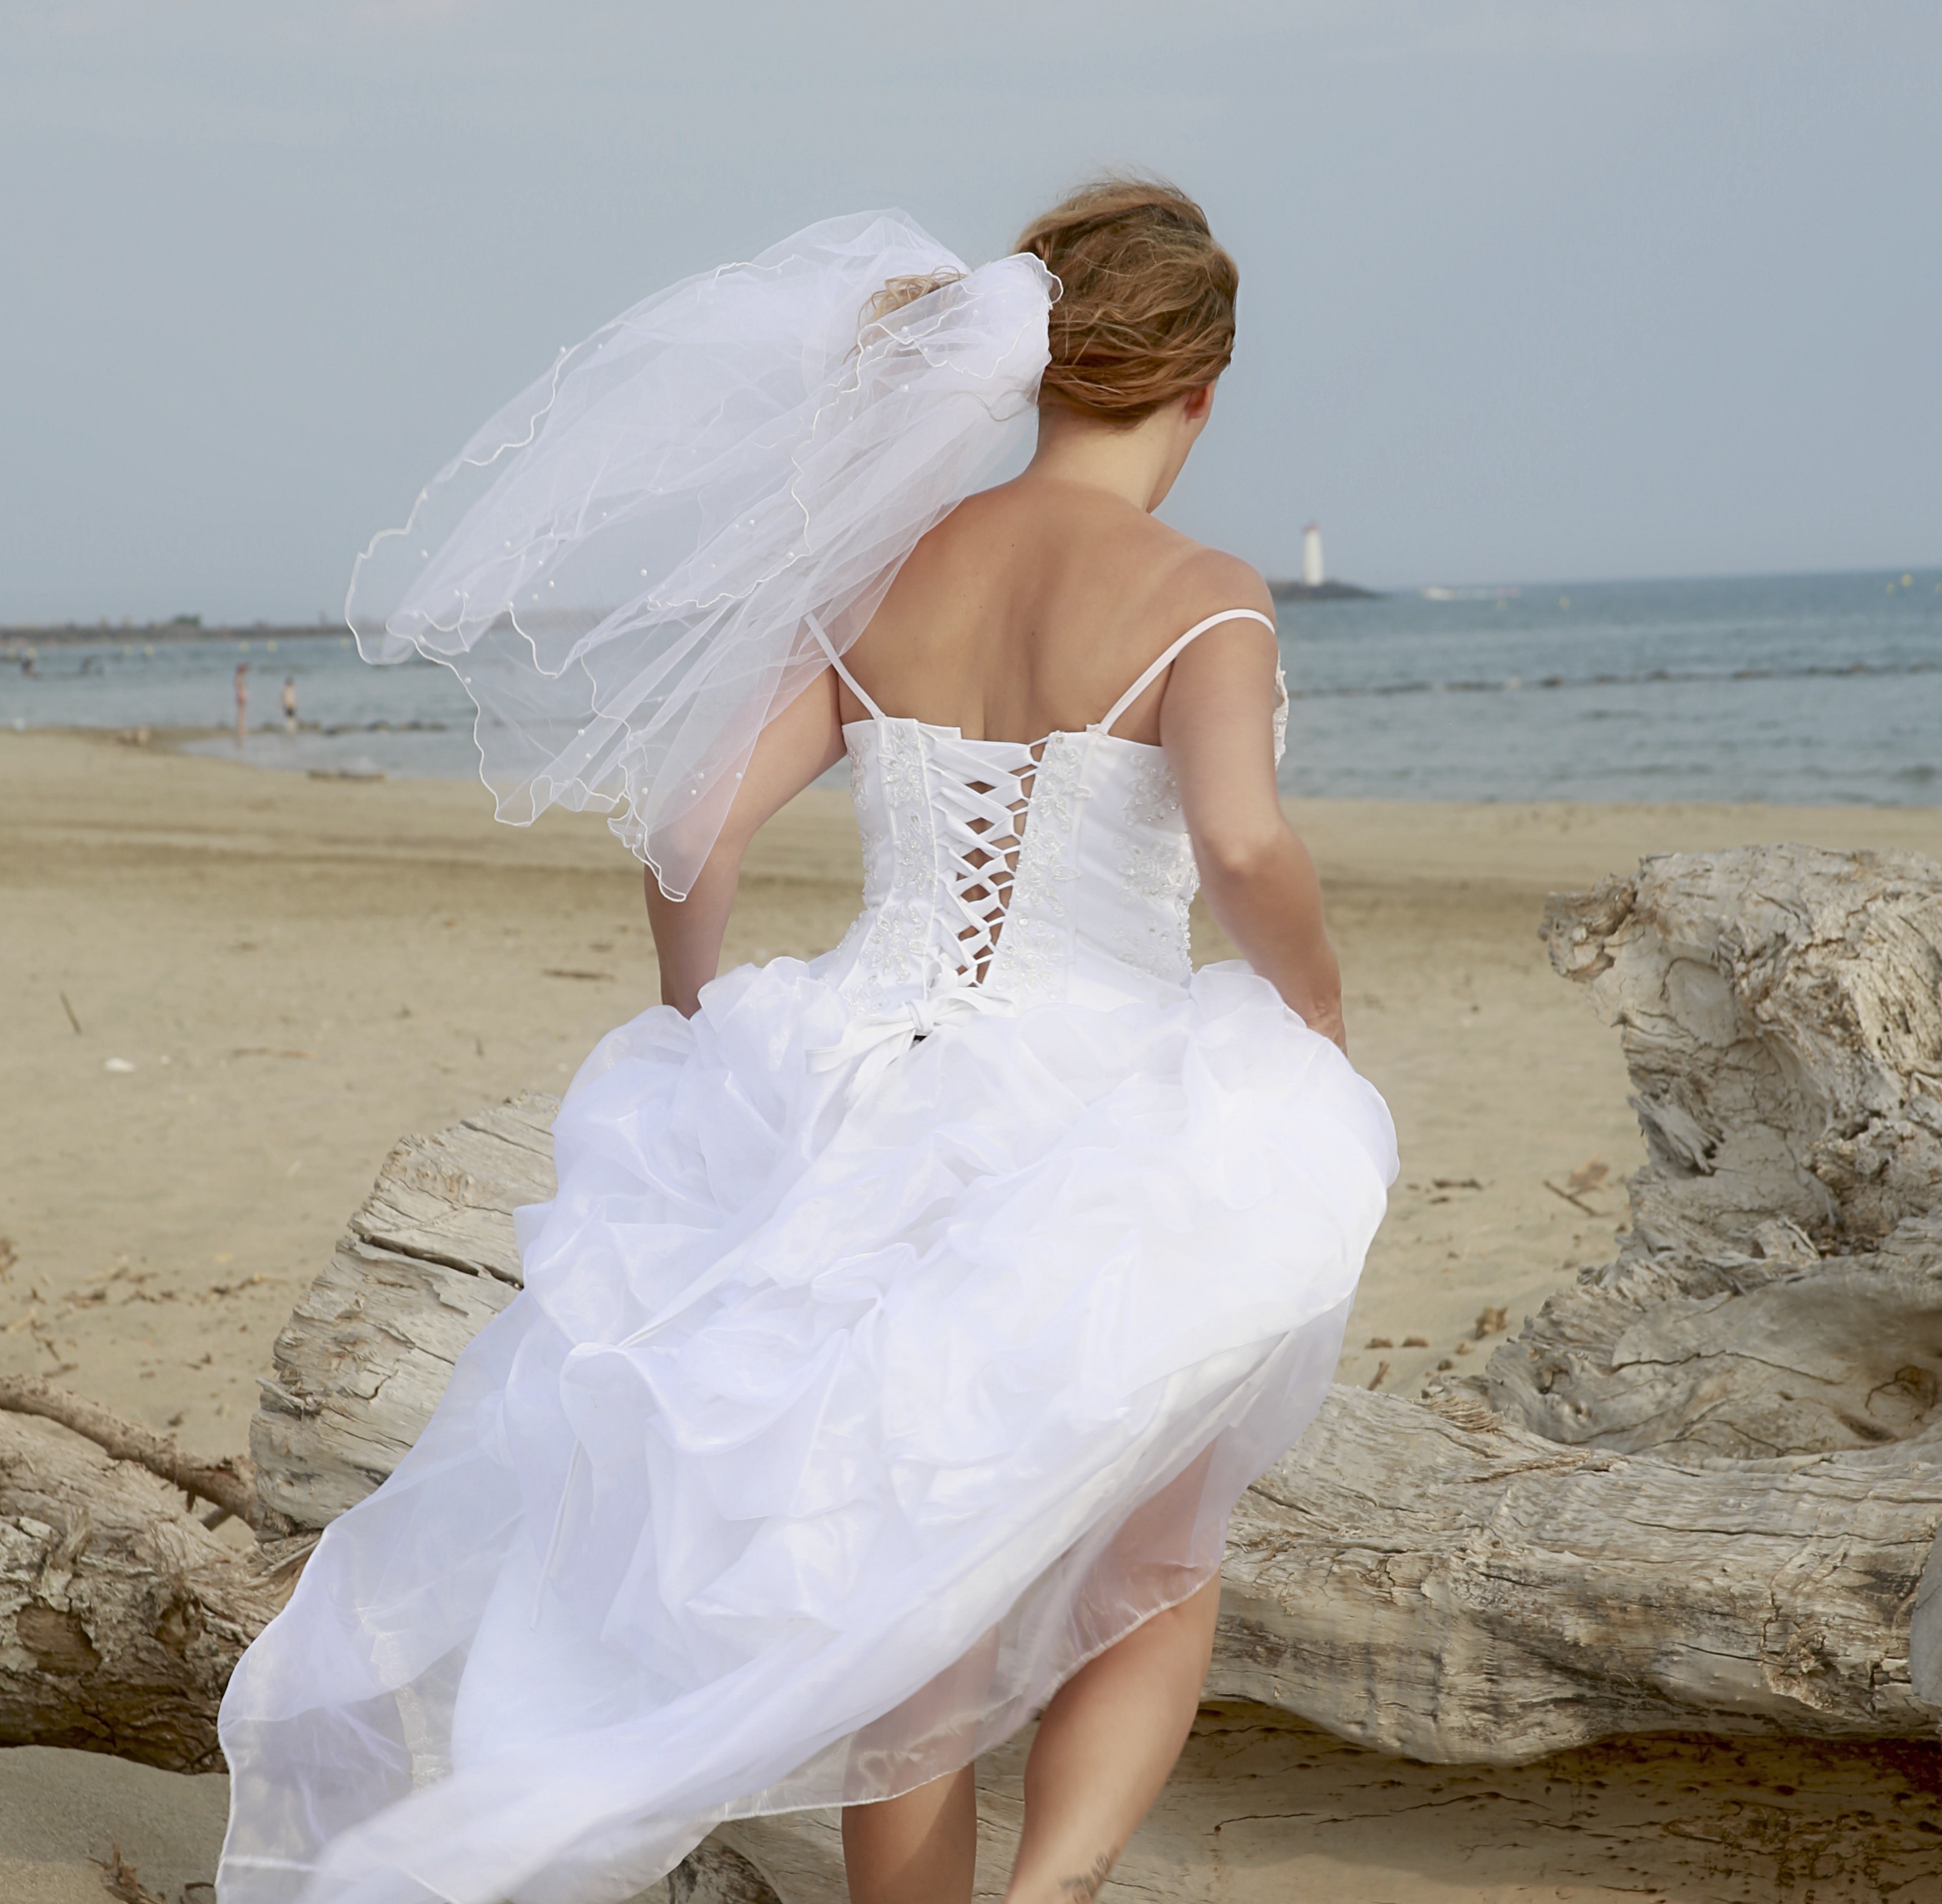 women's white spaghetti strap wedding dress and headress